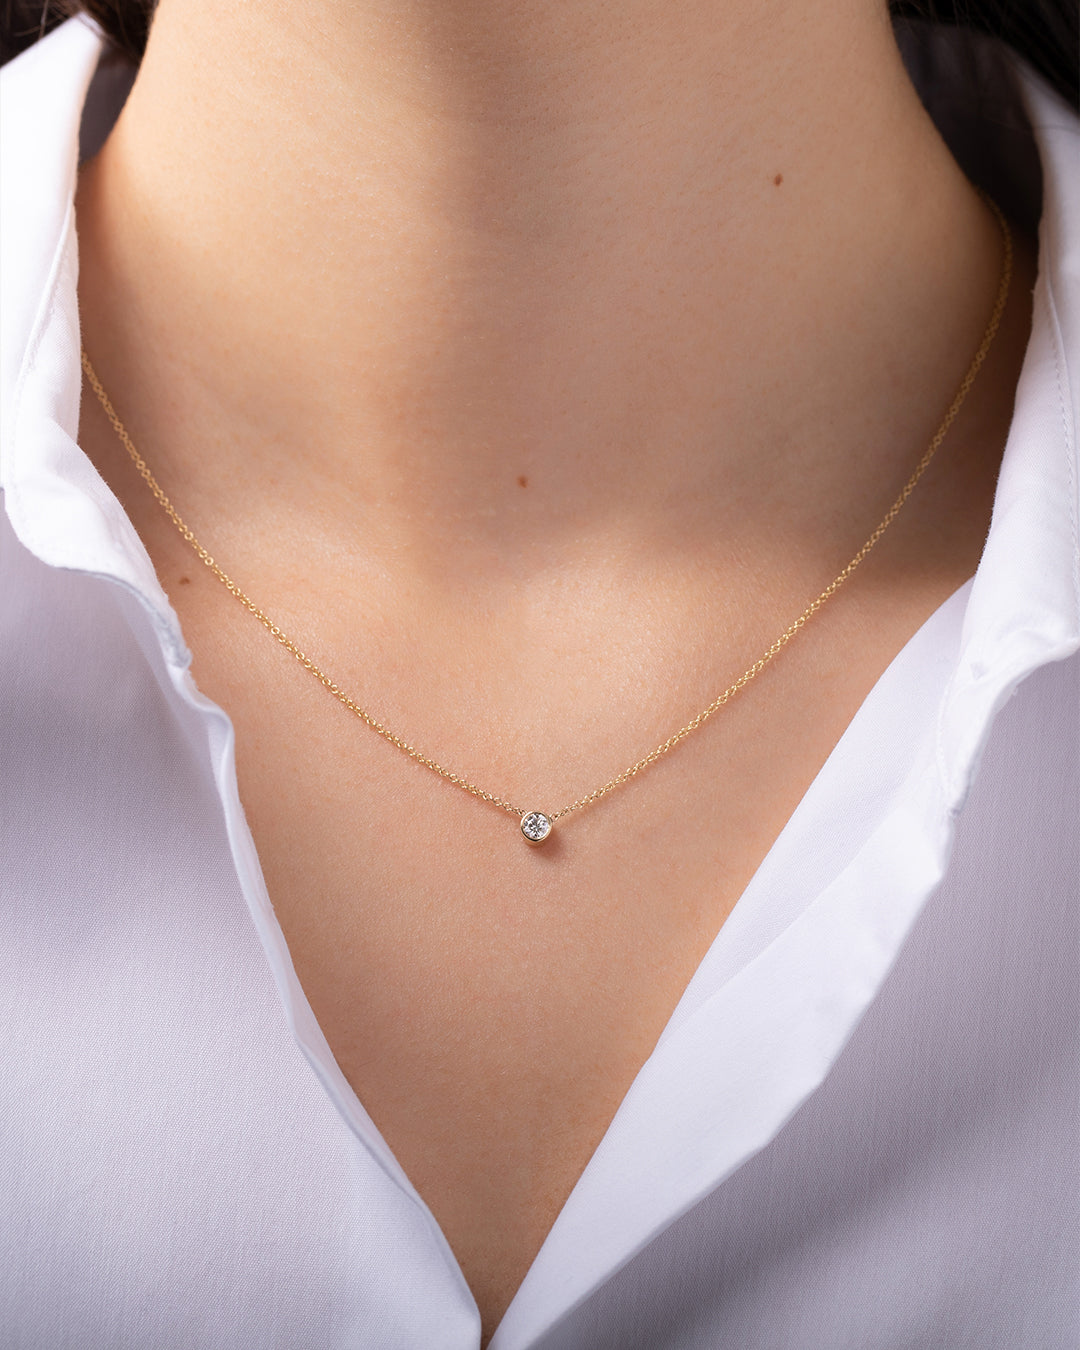 Large Bezel Diamond Necklace